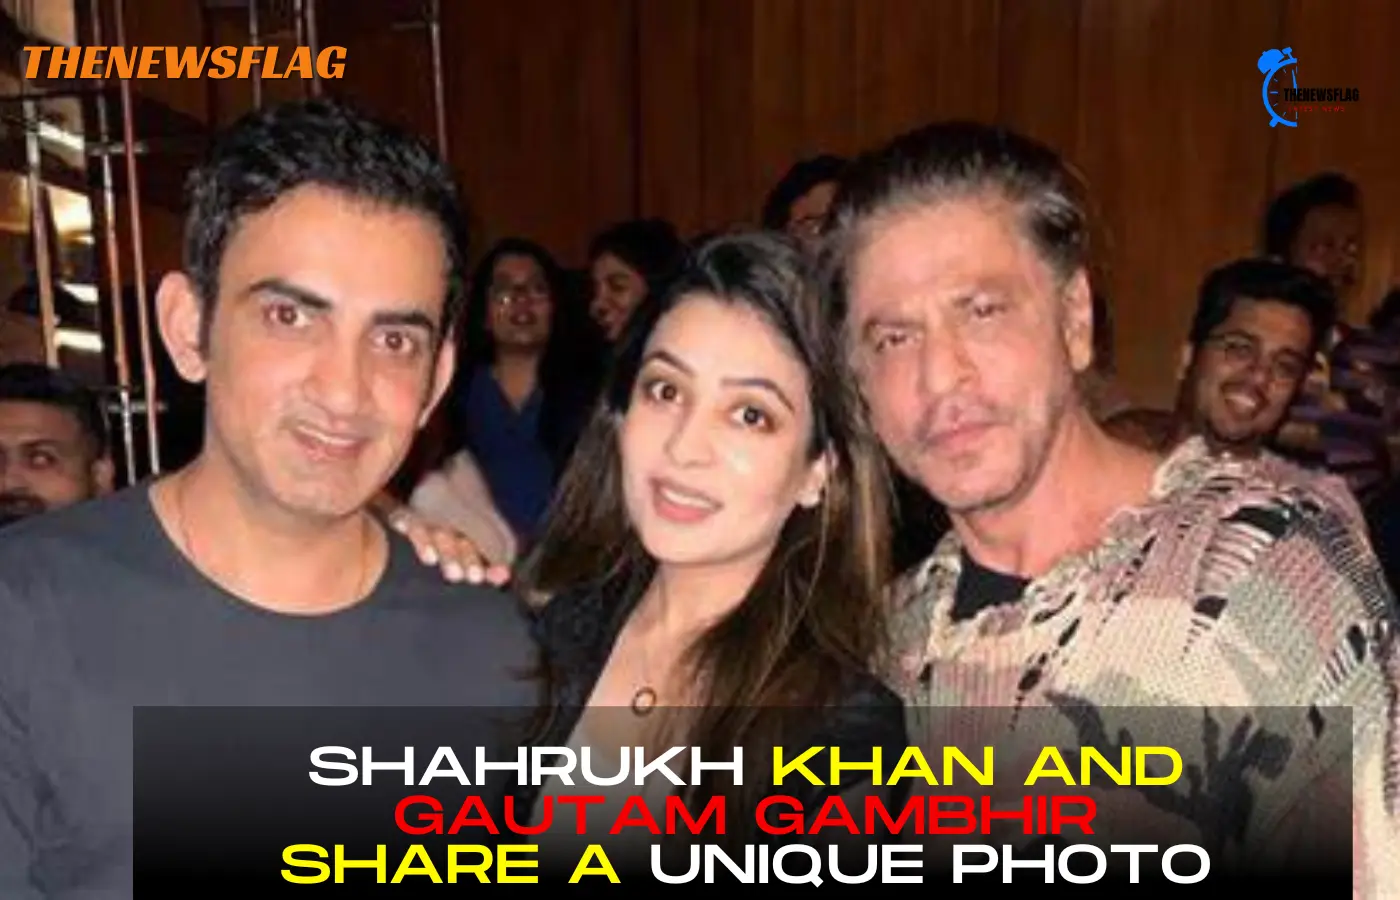 Shahrukh Khan and Gautam Gambhir share a unique photo: Some relationships last a lifetime.